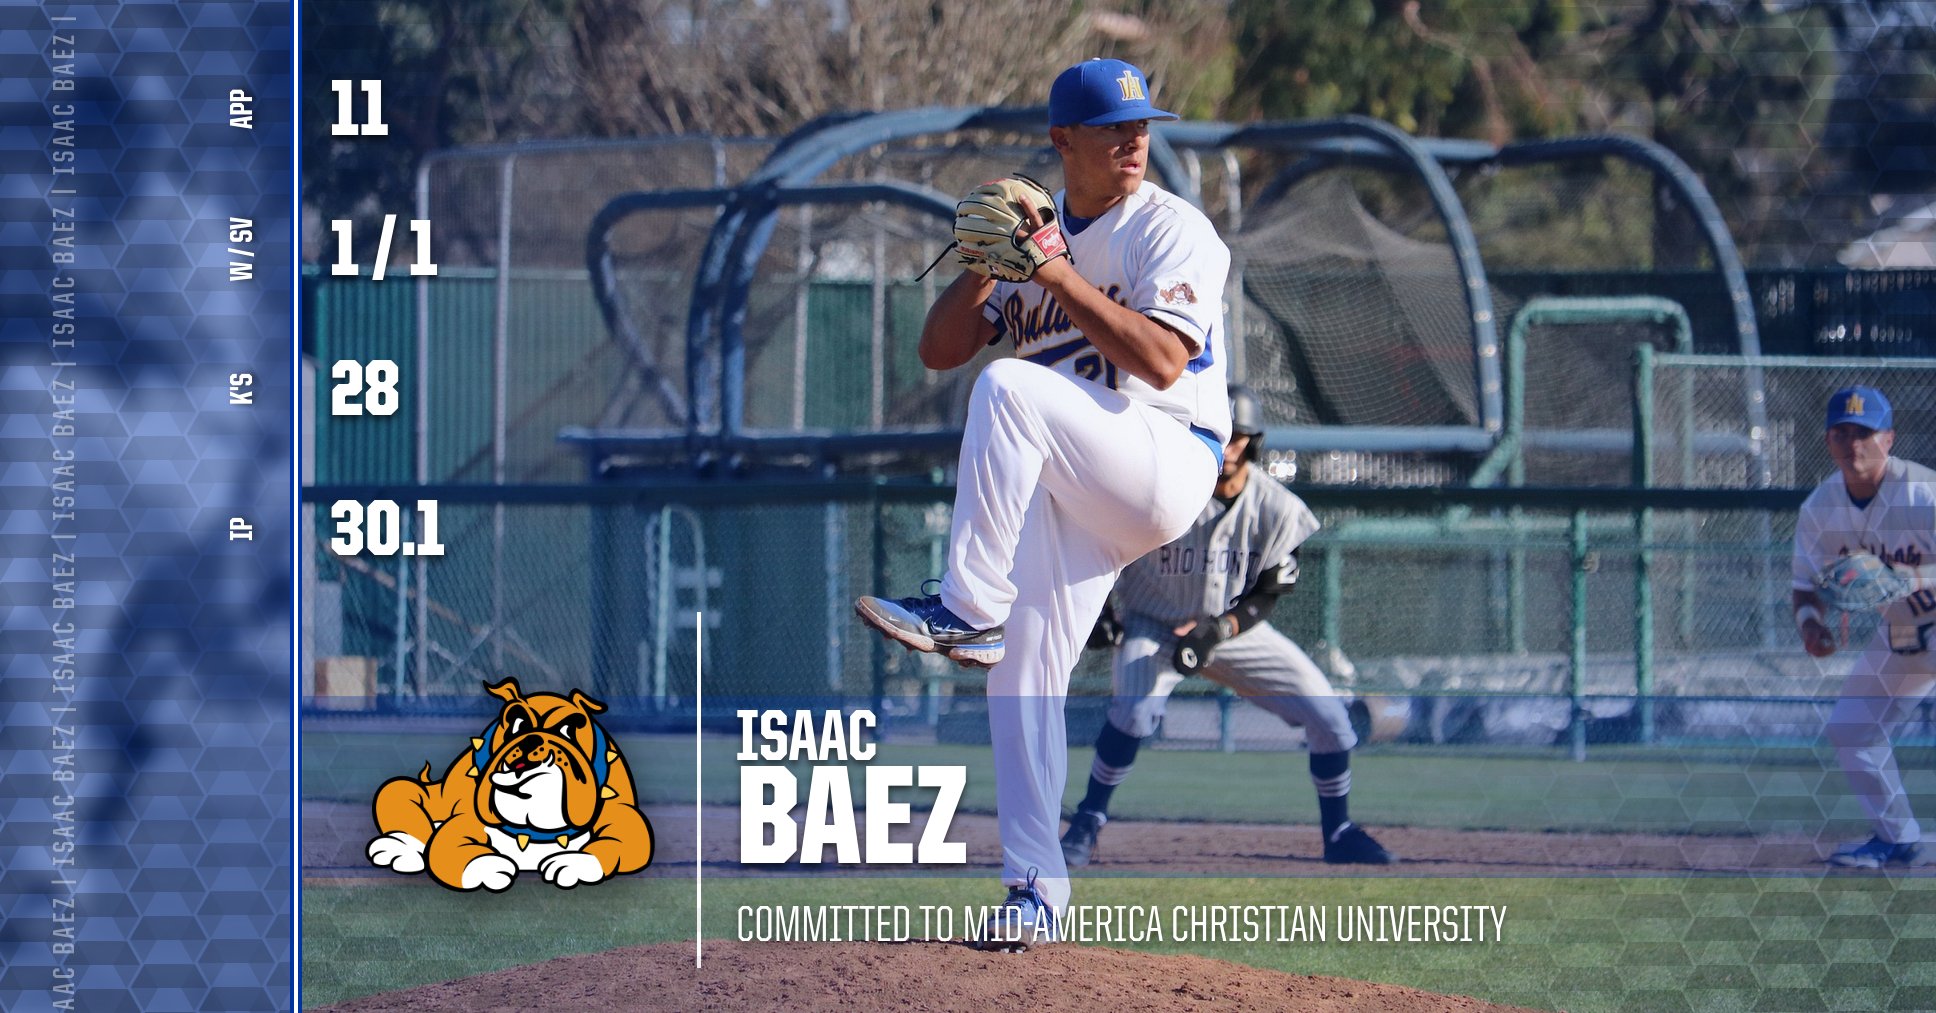 Baseball's Isaac Baez Headed to Mid-America Christian University